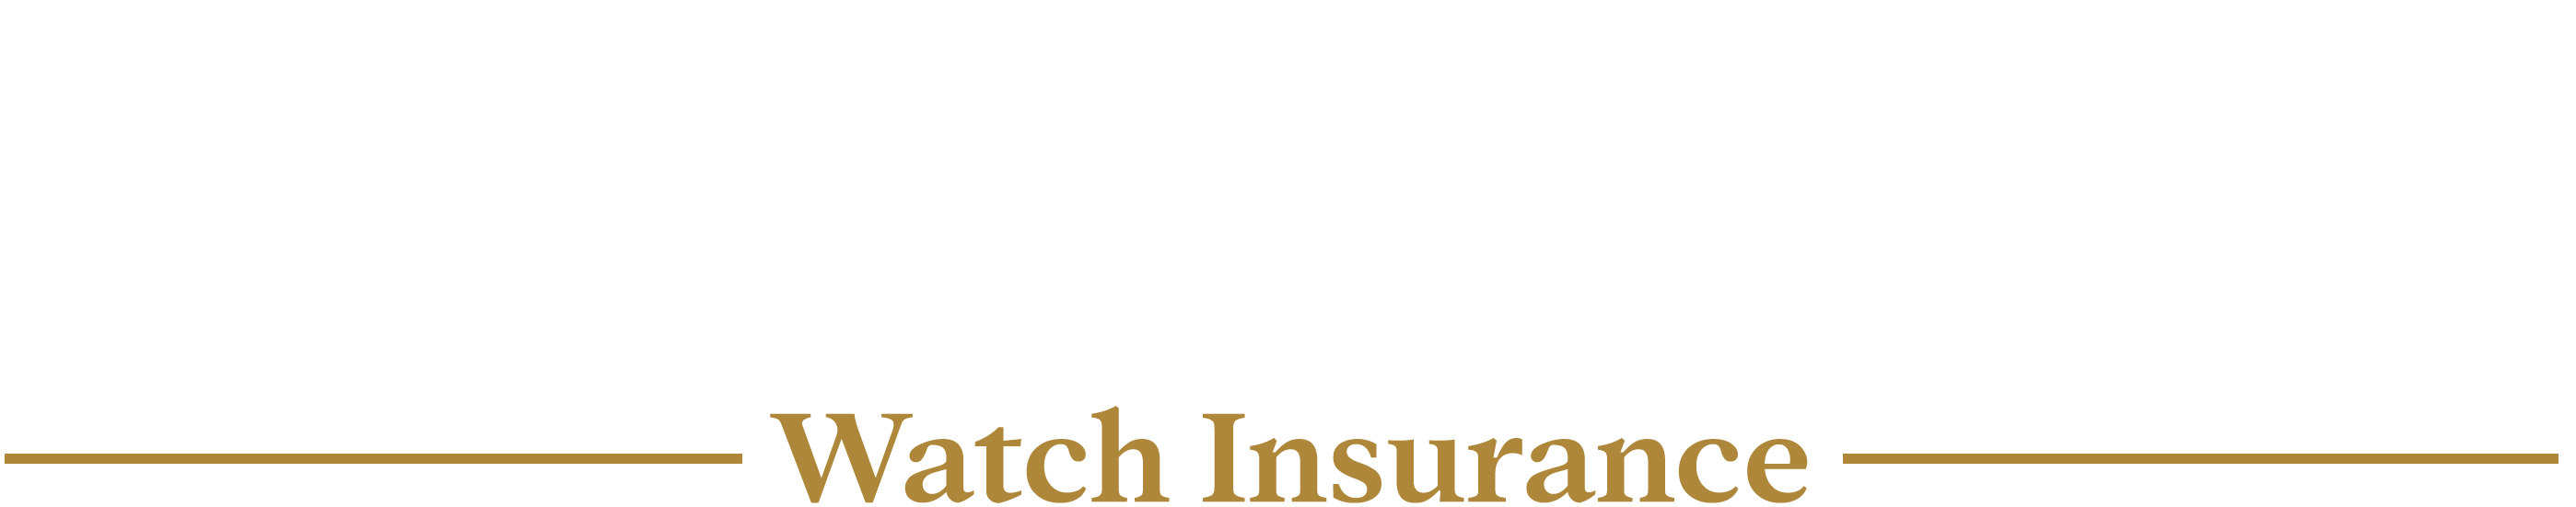 WonderCare Watch Insurance